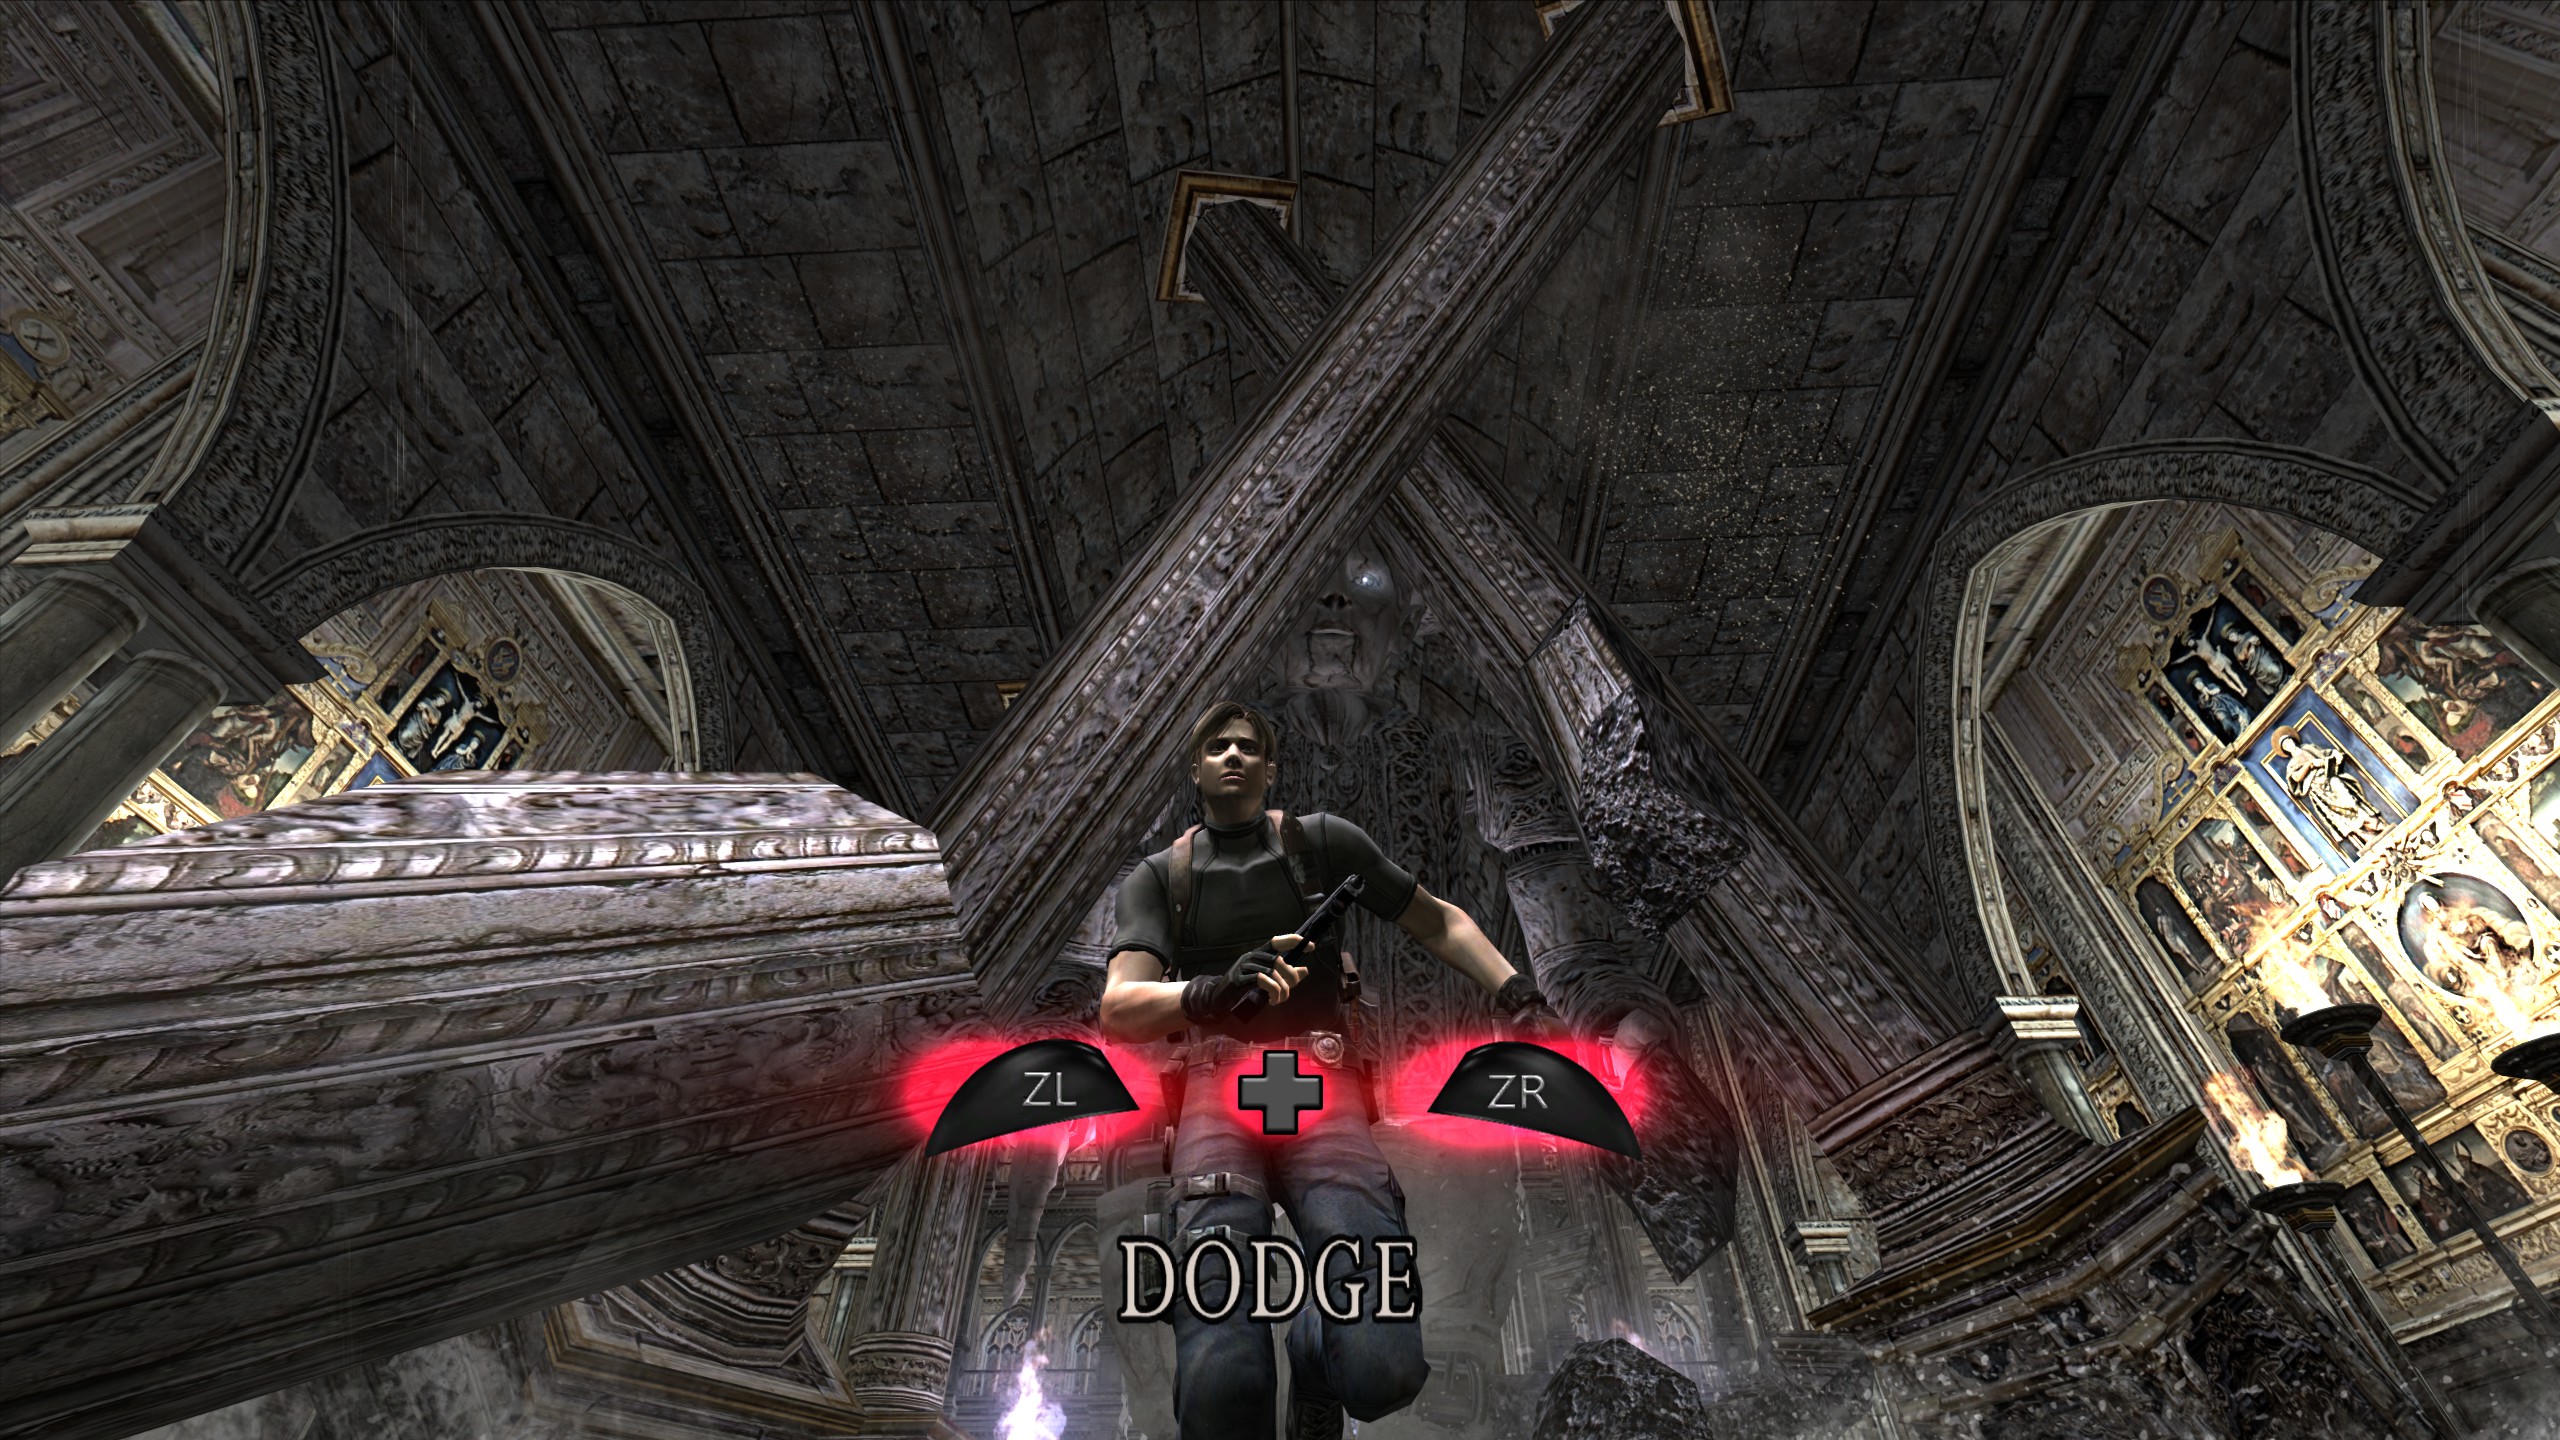 ingame screenshot 5 image - Resident Evil 5 mod for Resident Evil 4 (2005)  - Mod DB